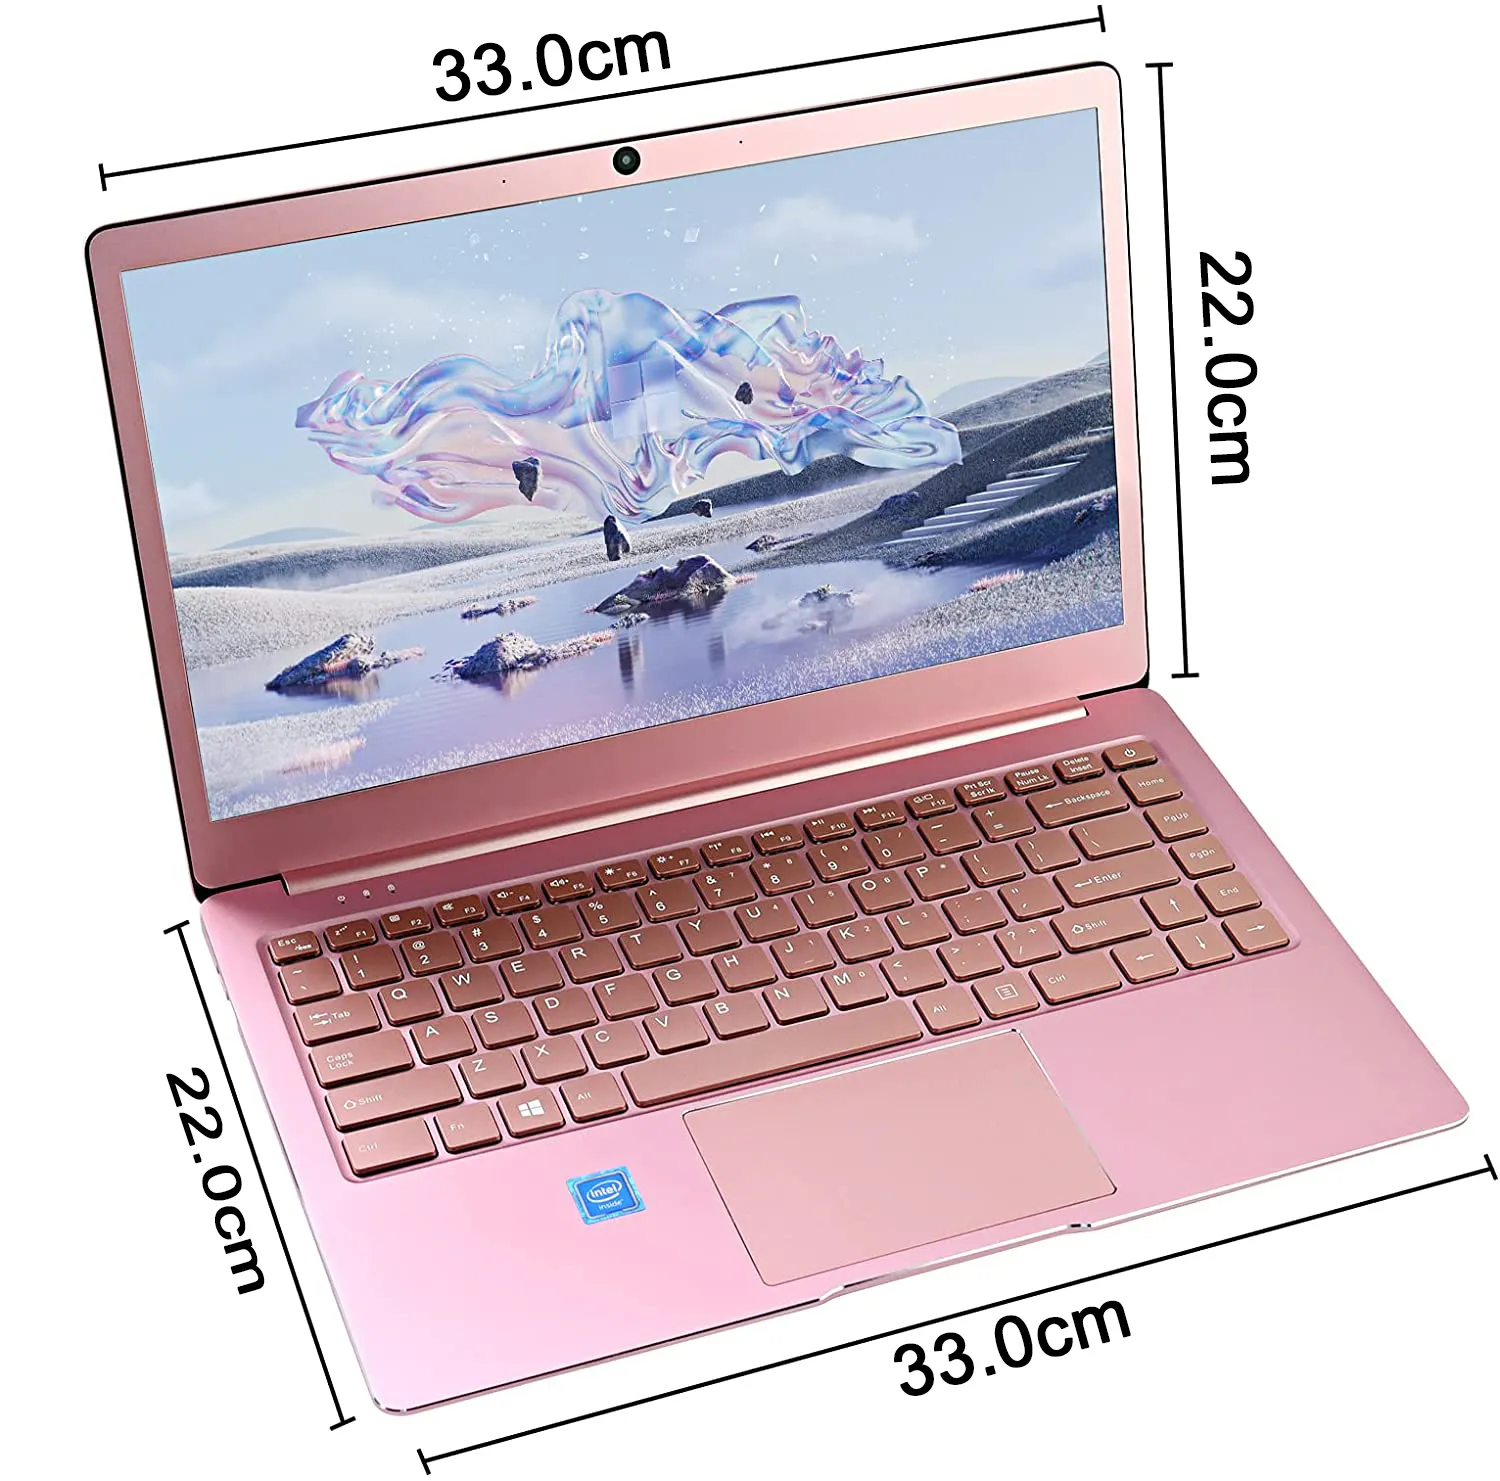 Laptops Original 7 One Mix1S Tablet PC Mini Laptop Intel Celeron 3965Y  8GB/256GB Silver Licence Windows 10 Touchscreen Bluetooth 1.5GHz